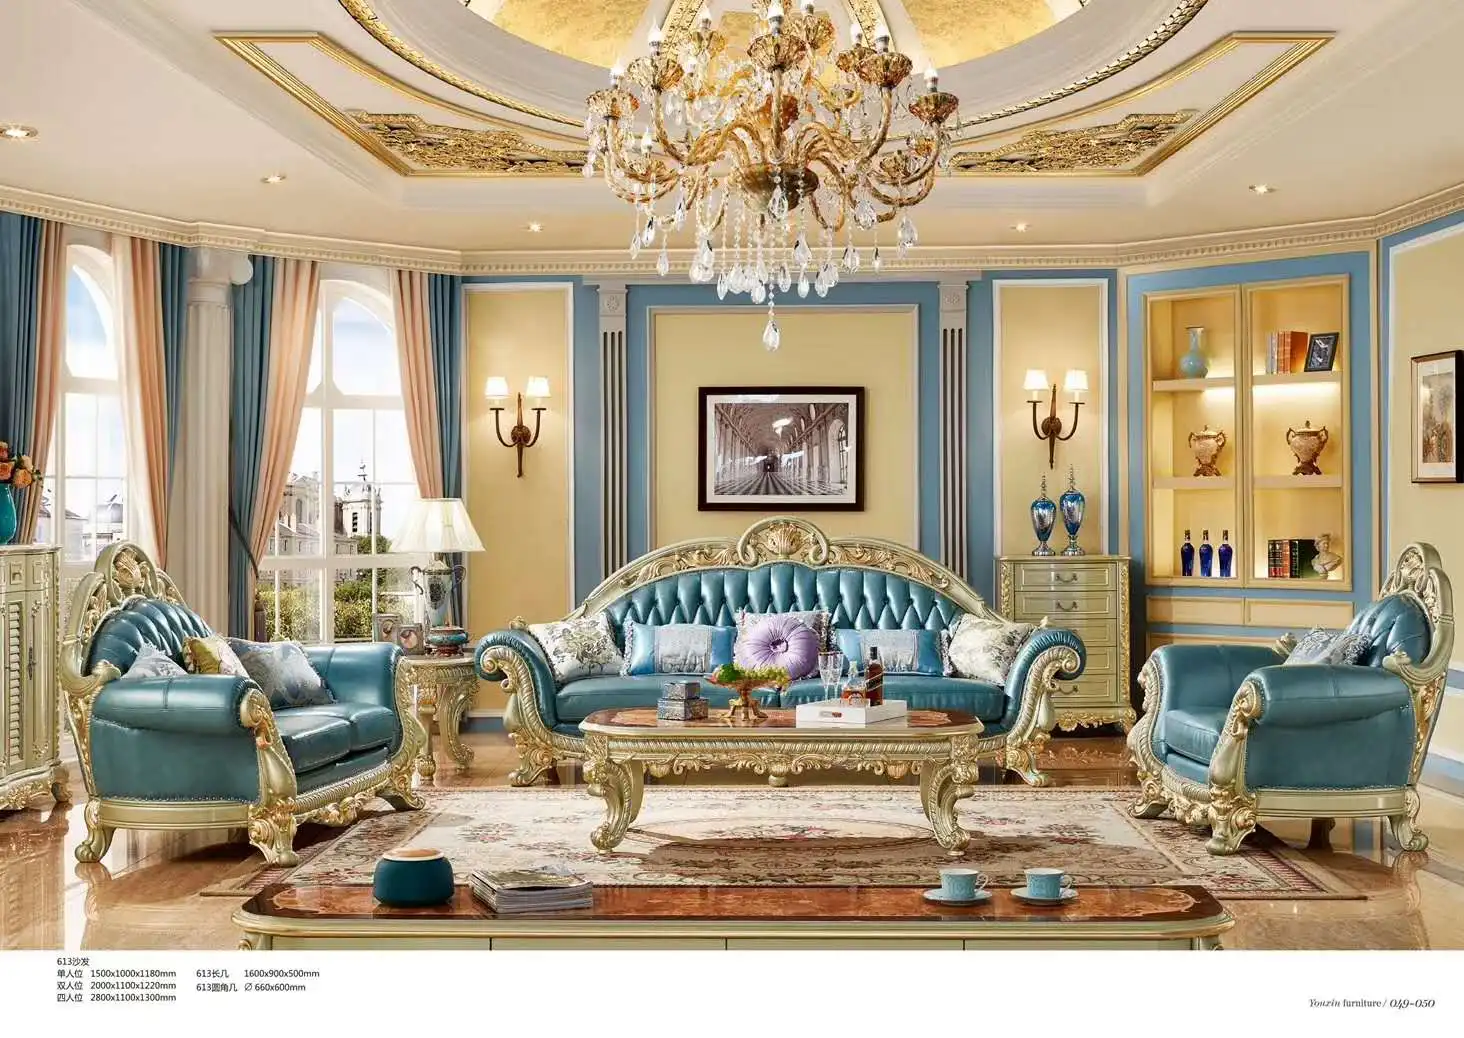 Hot sale home anitique furniture European classical wooden carved handmade livingroom furniture royal luxury sofa set